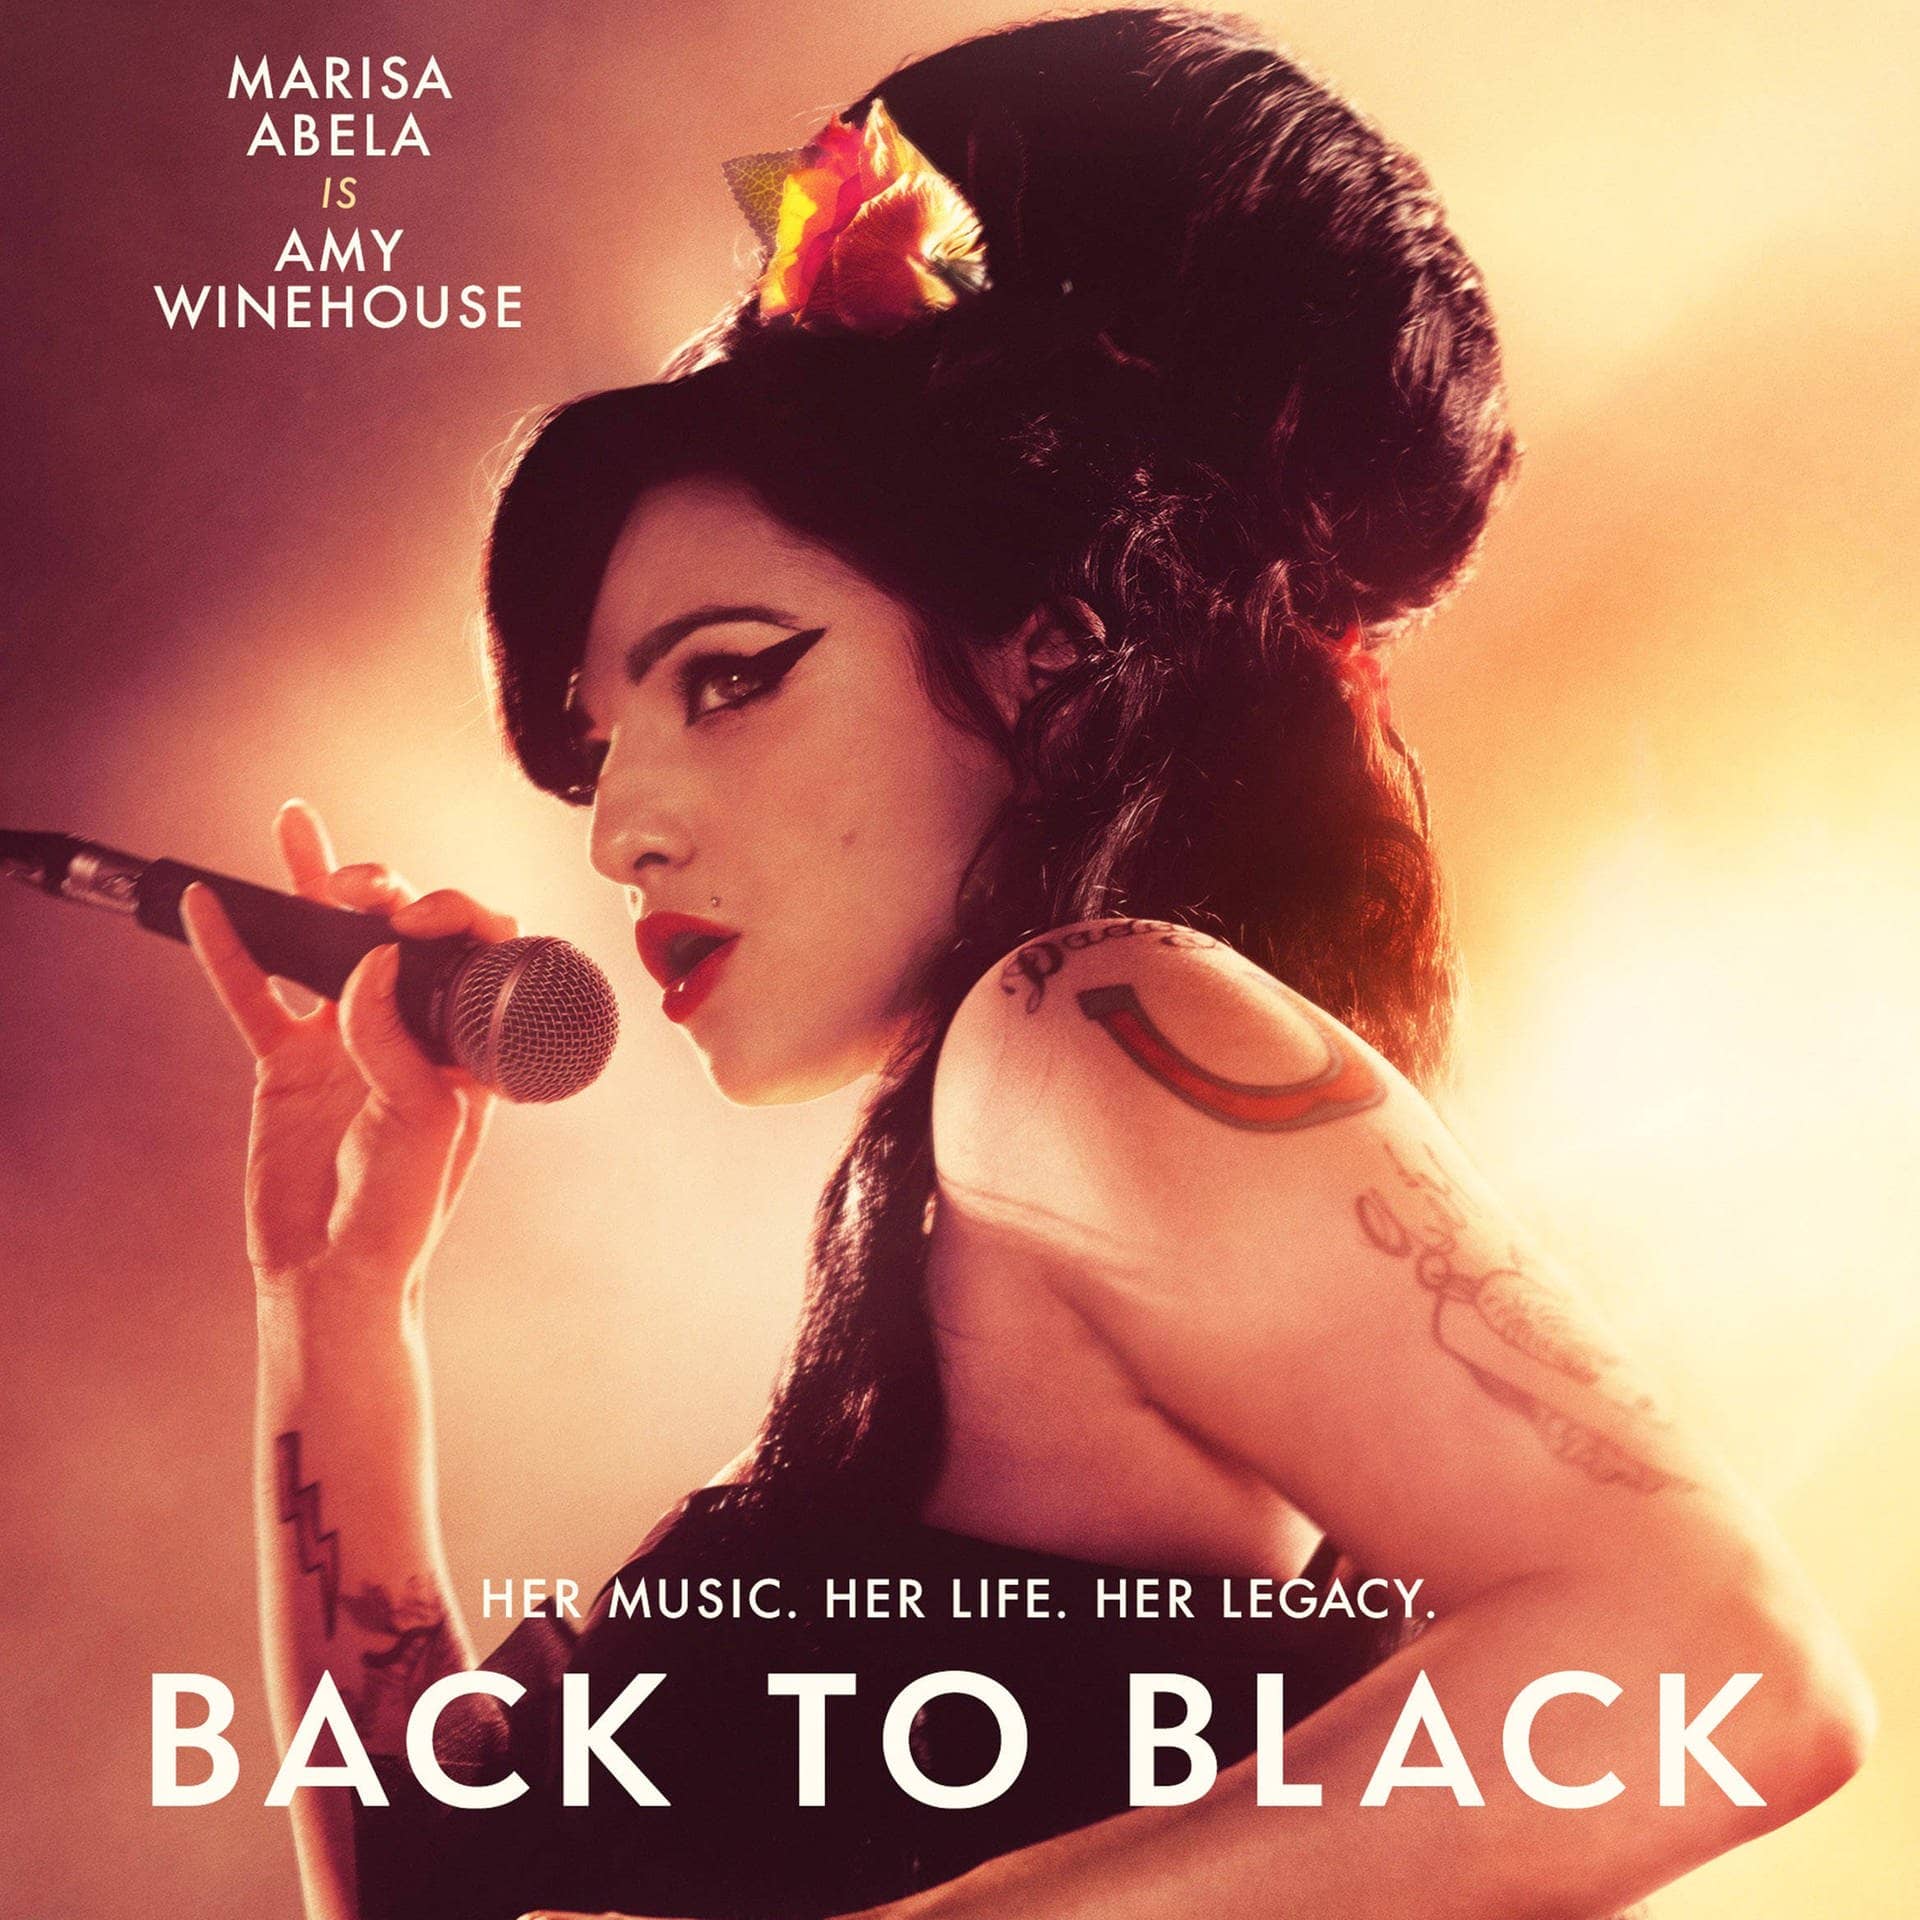 Szene aus dem Film über Amy Winehouse „Back to Black“ mit Marisa Abela